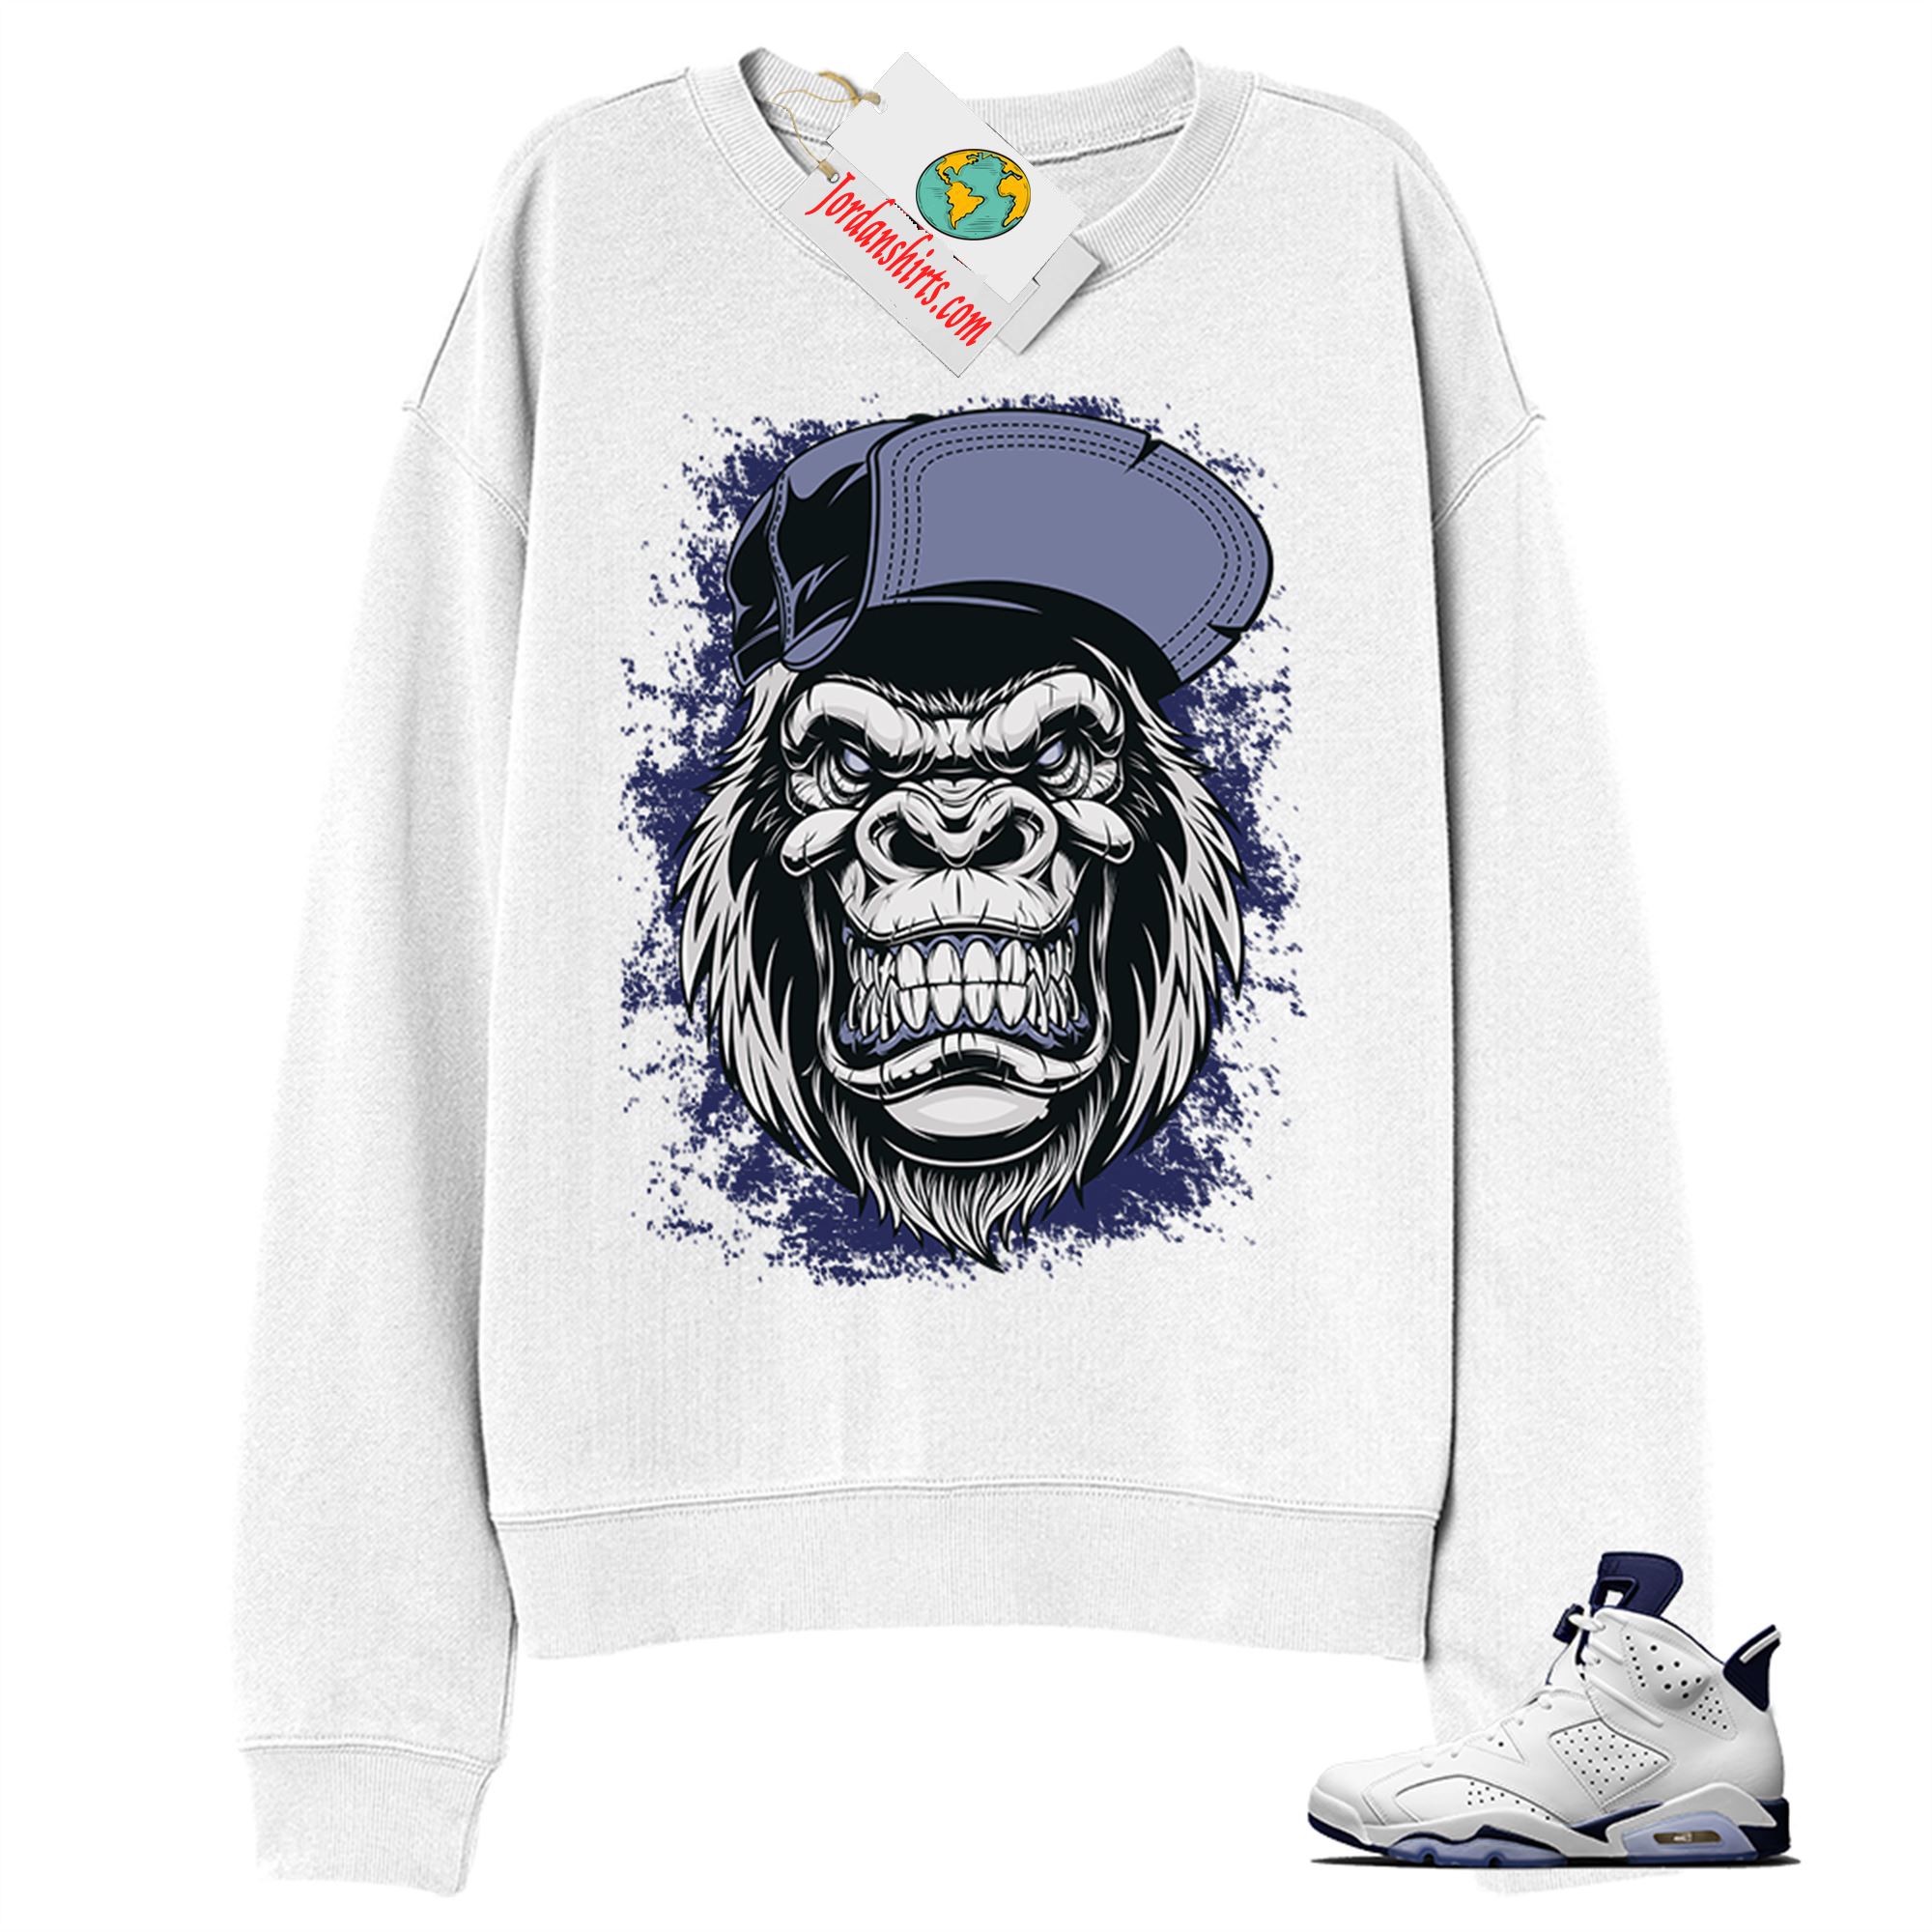 Jordan 6 Sweatshirt, Ferocious Gorilla White Sweatshirt Air Jordan 6 Midnight Navy 6s Plus Size Up To 5xl